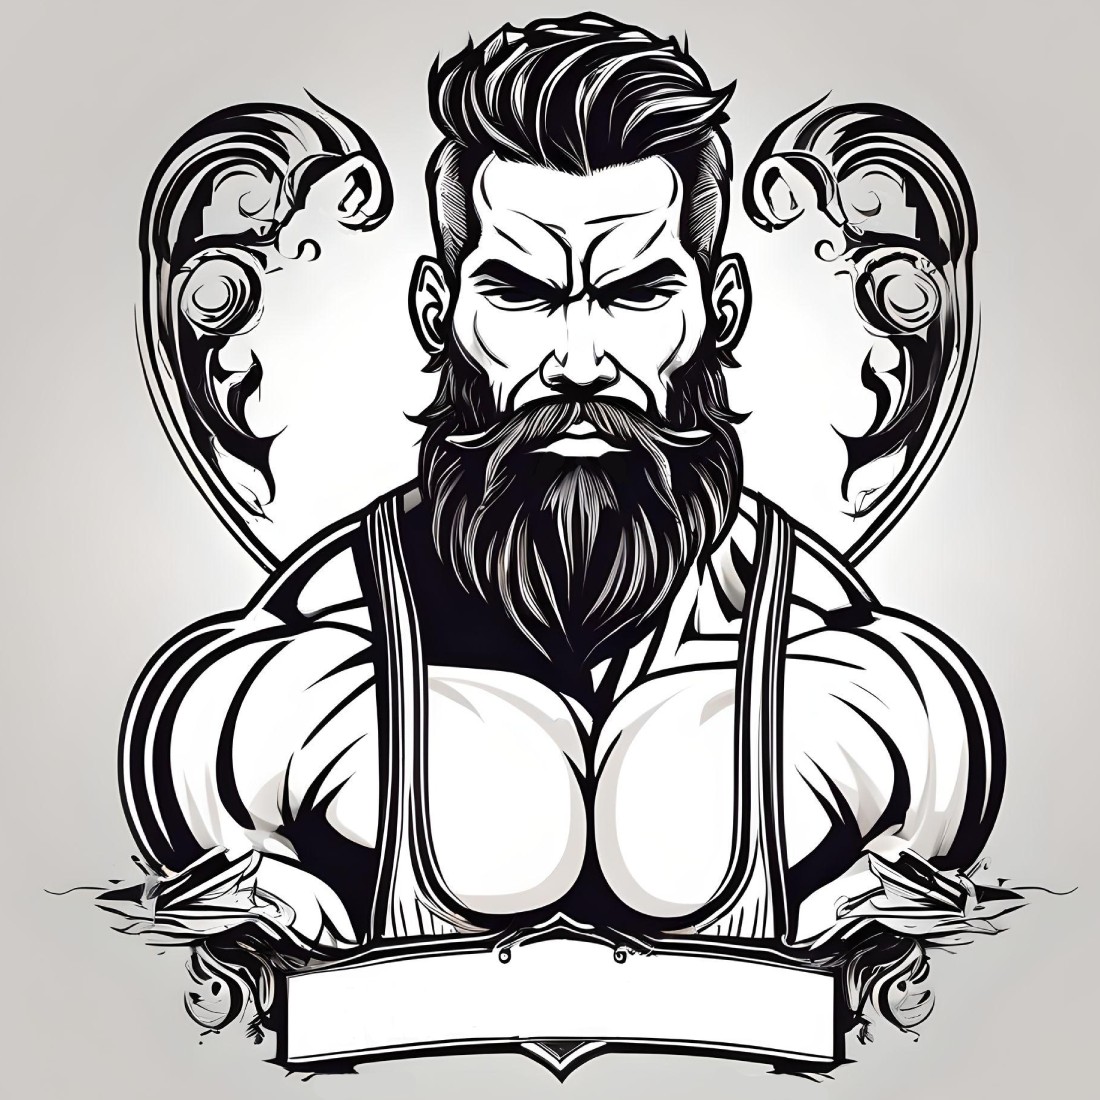 Brutal man, beard, logo, black and white, barbershop preview image.